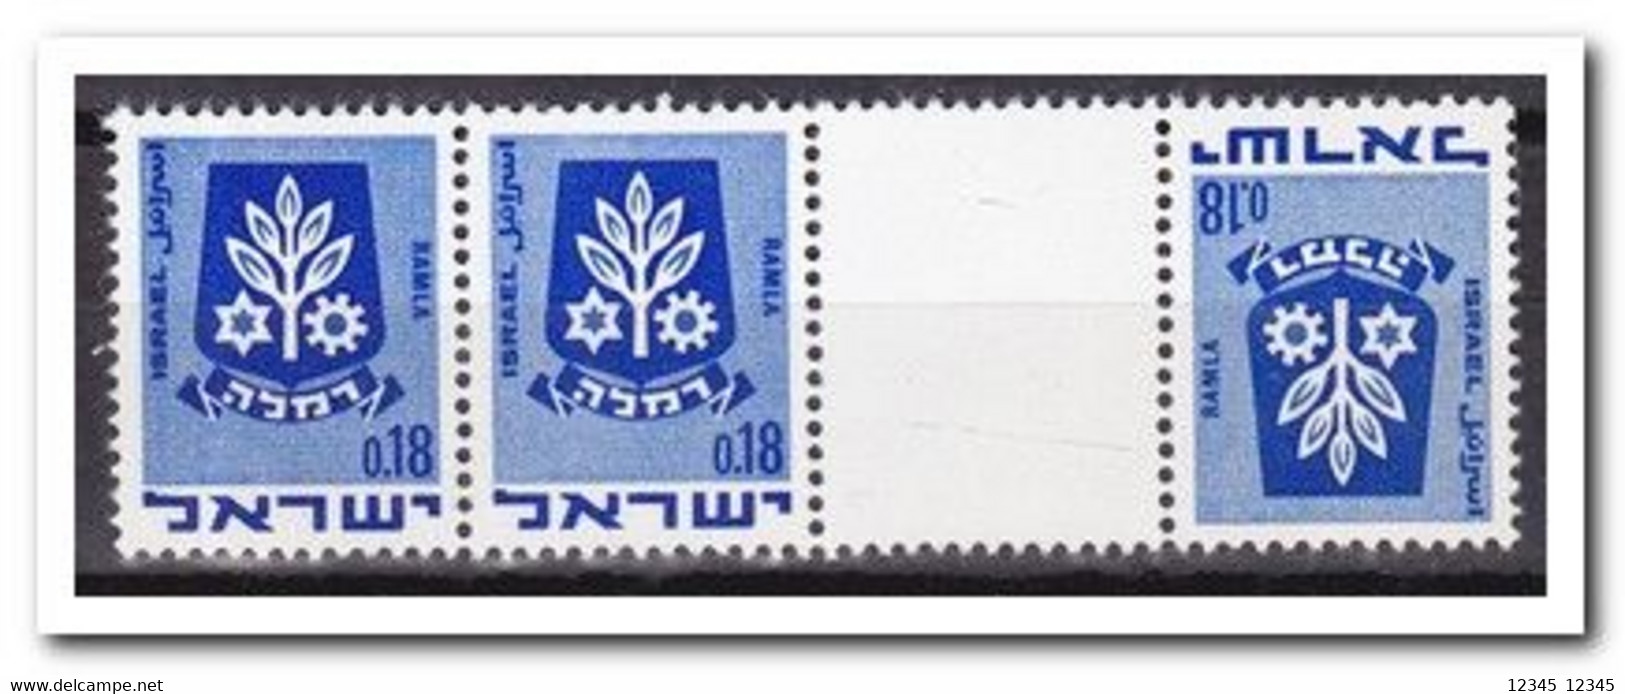 Israël 1973, Postfris MNH, Combinations - Markenheftchen